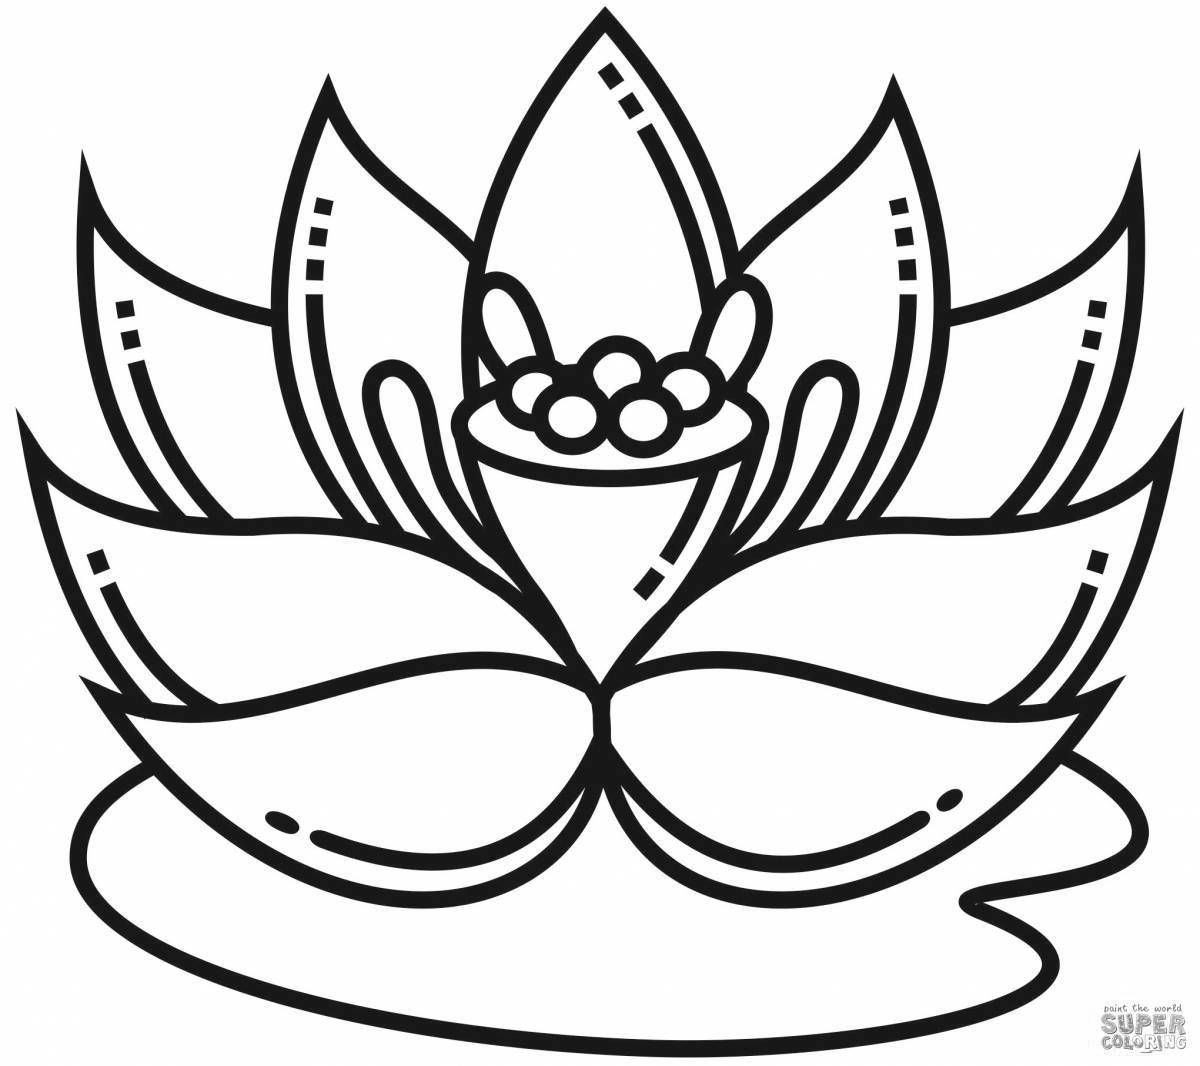 Bright lotus coloring page